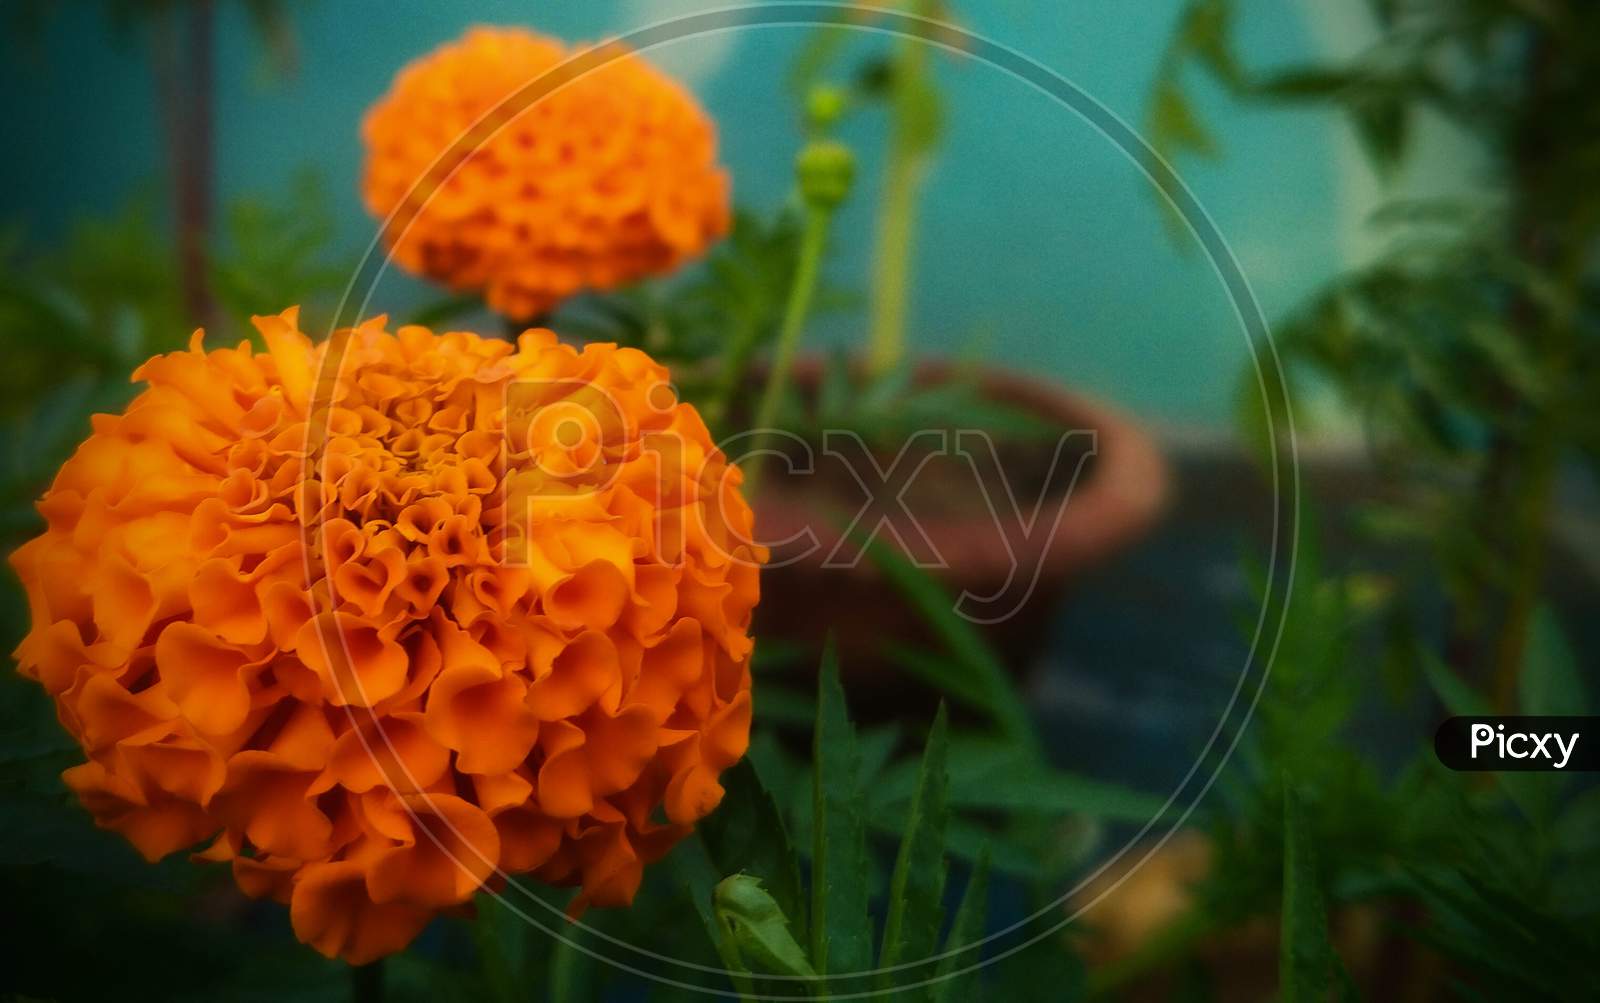 Image of Marigold flower